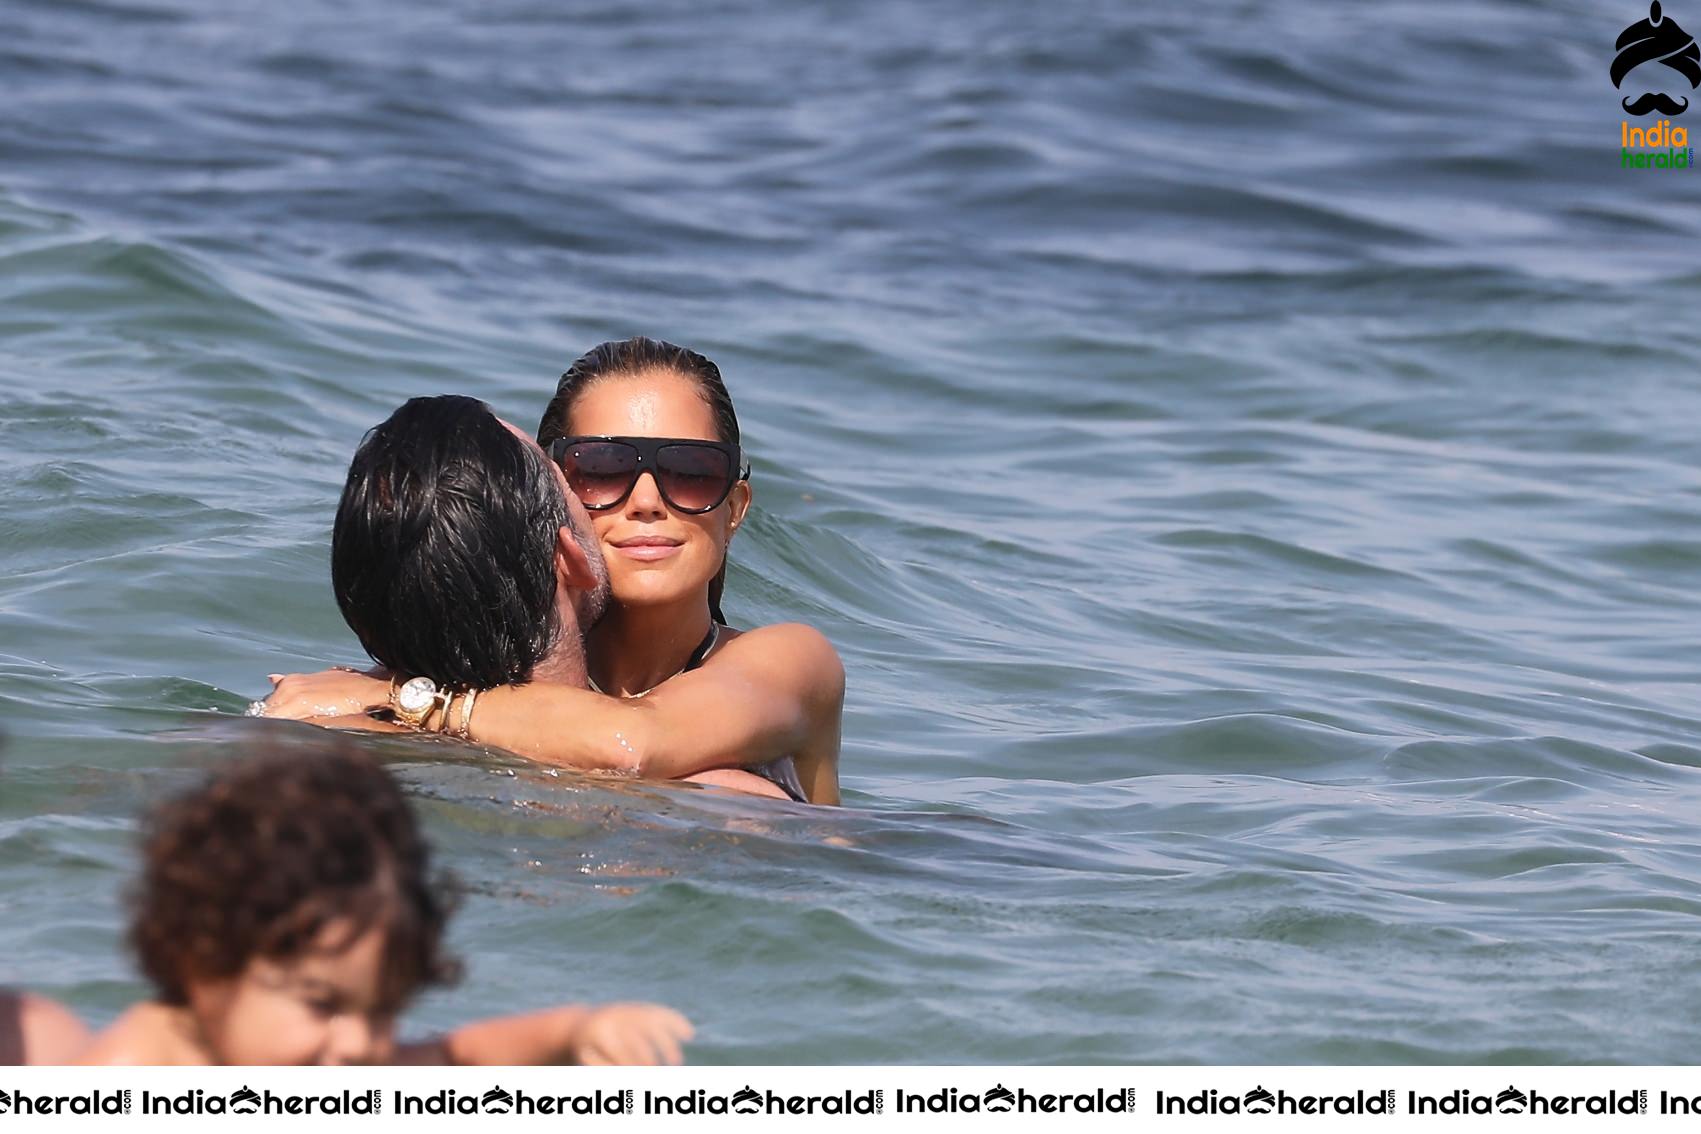 Sylvie Meis in Bikini and Enjoying with Boyfriend by bathing in the Beach